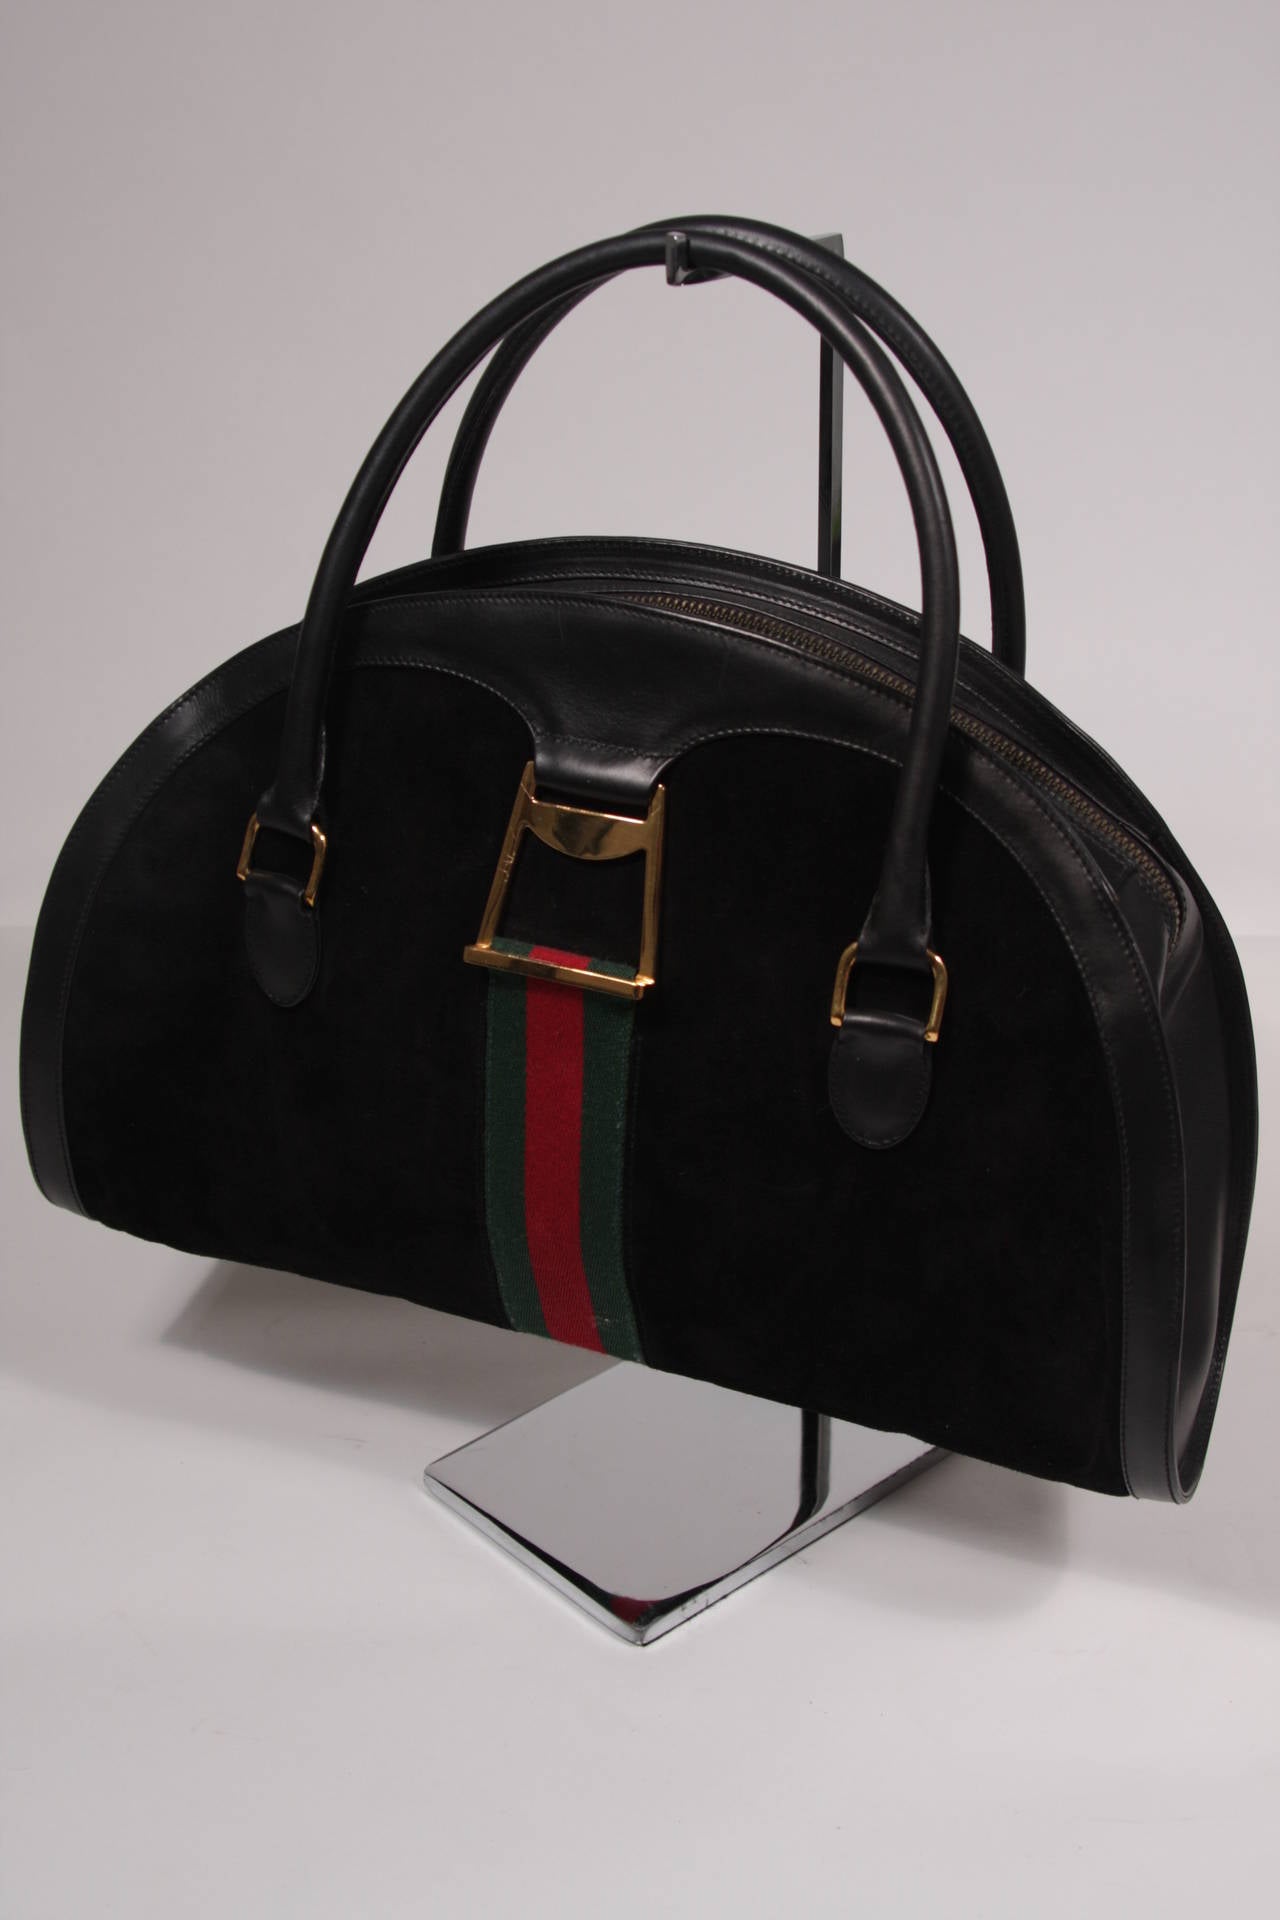 Gucci Black Leather Suede Purse Excellent Condition 2